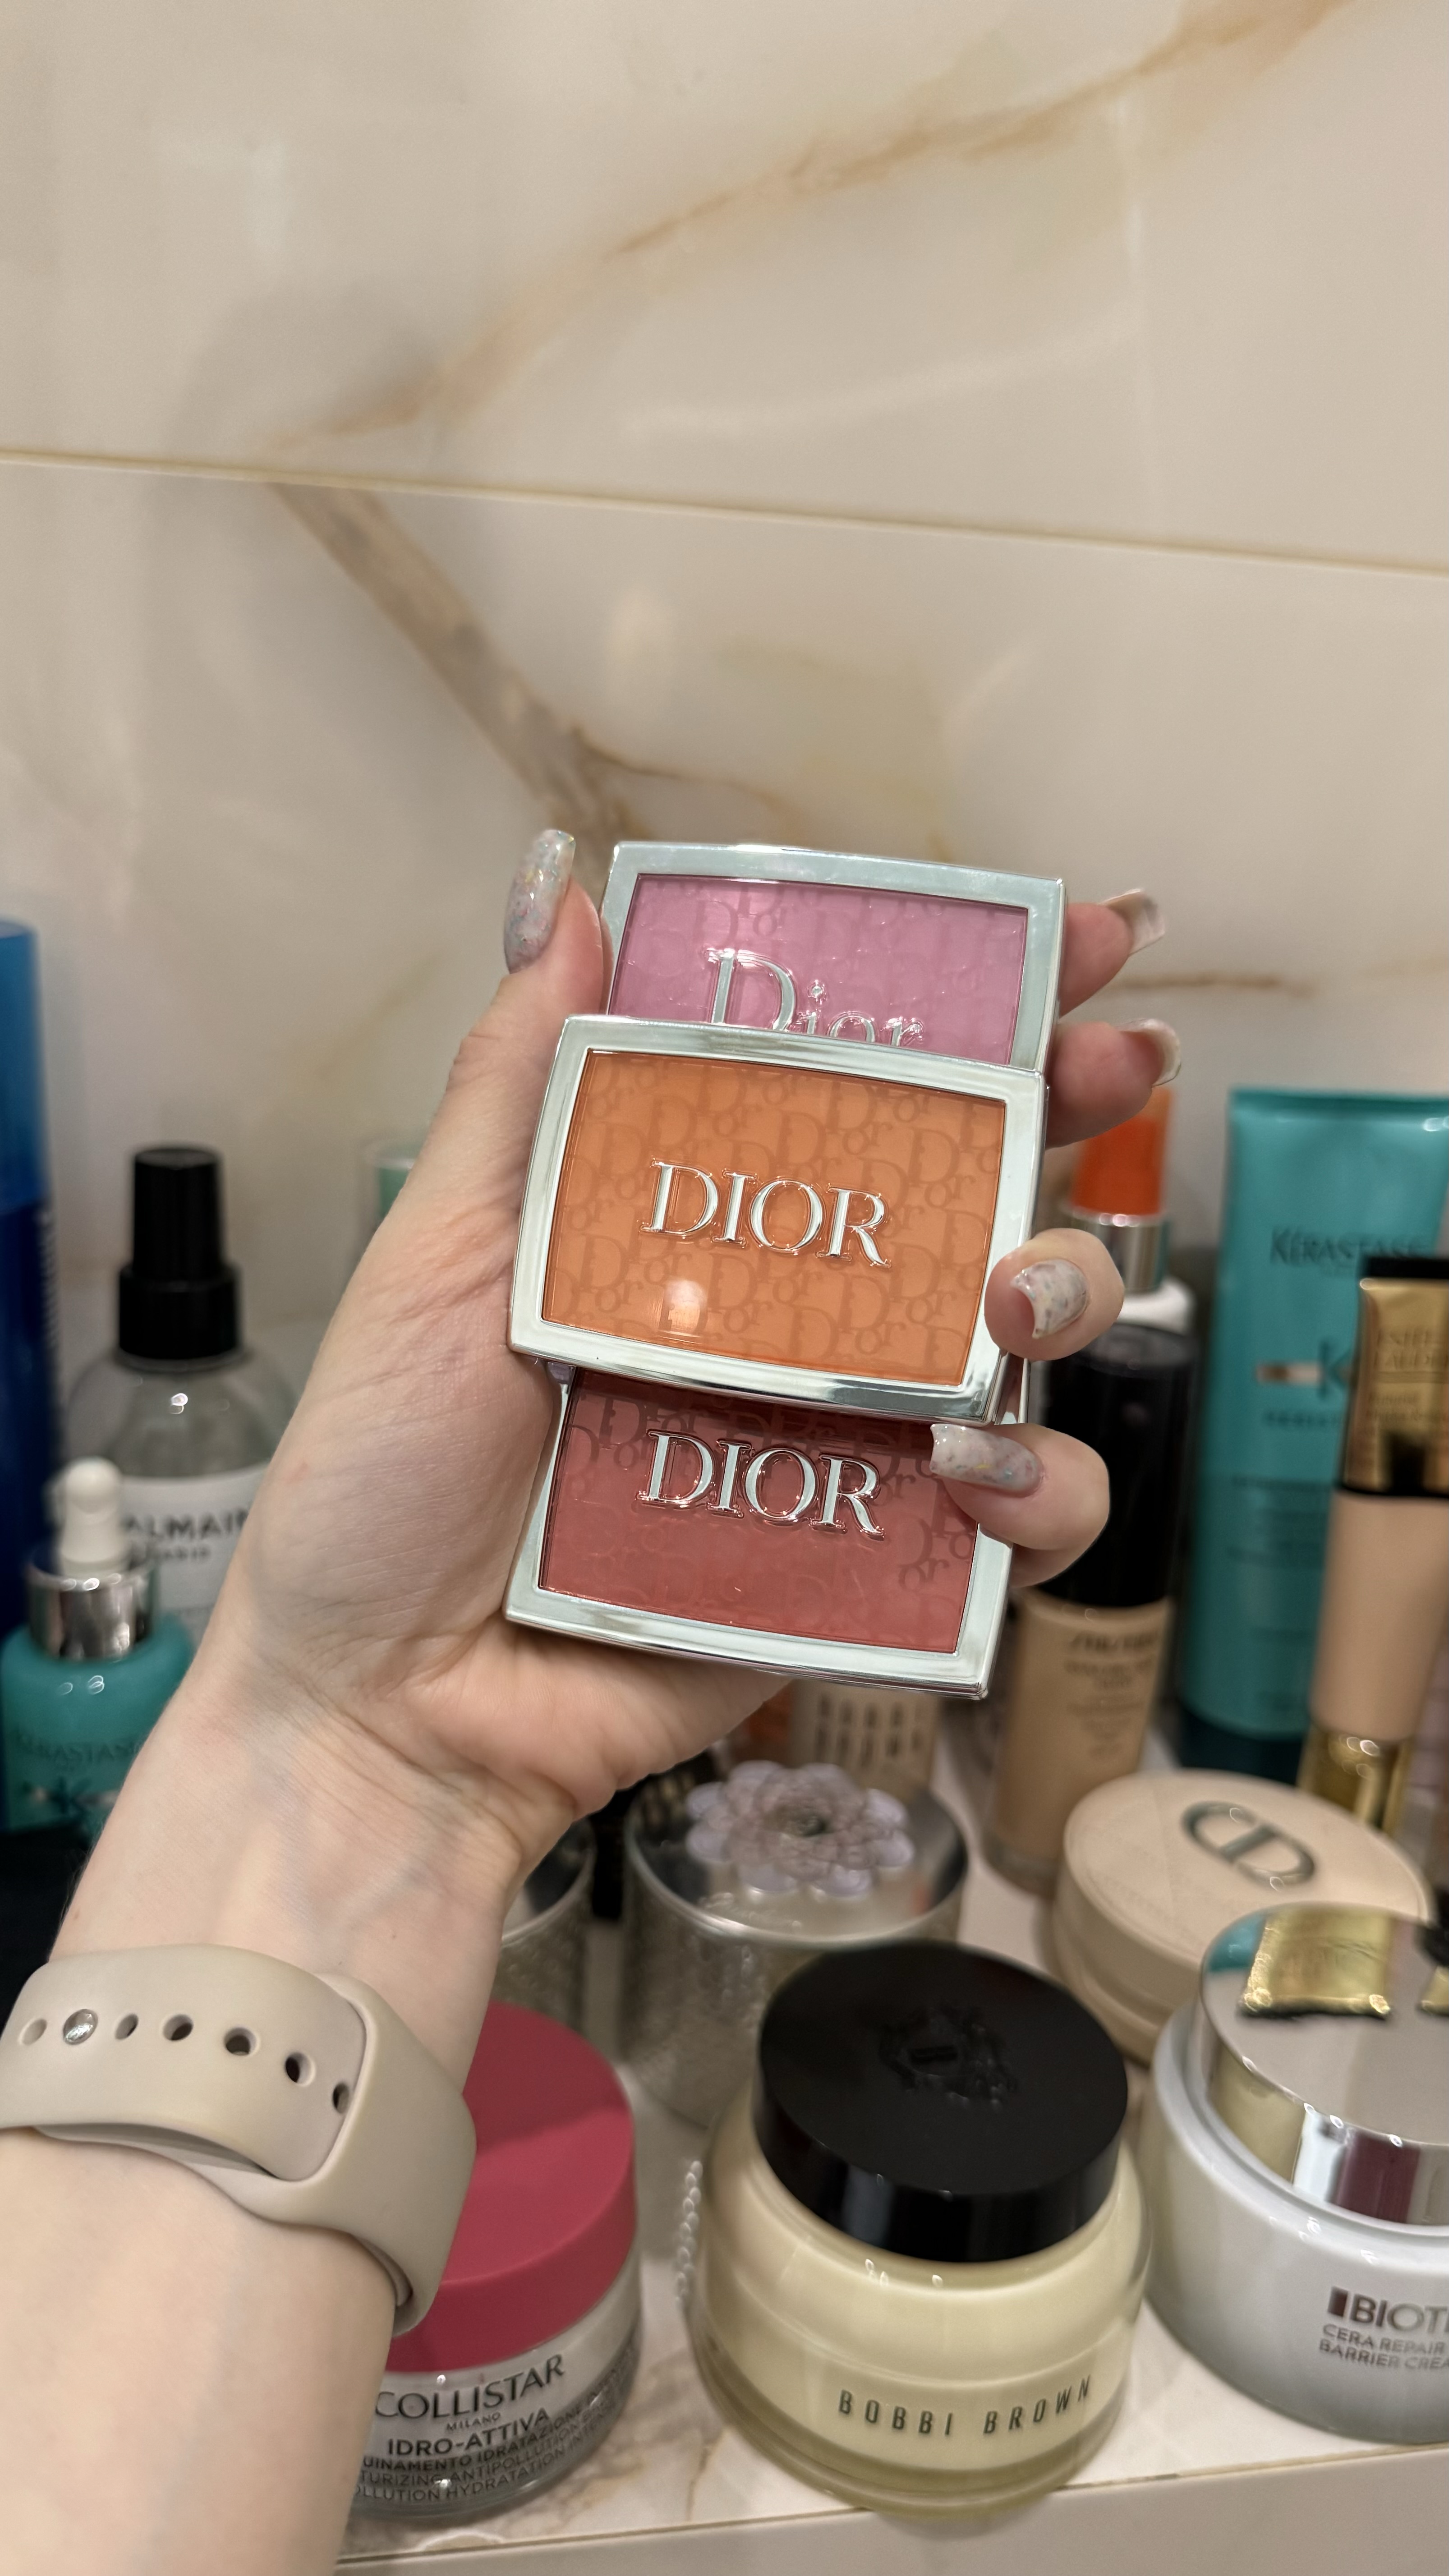 Пенззлі Real Techniques та трохи про Dior